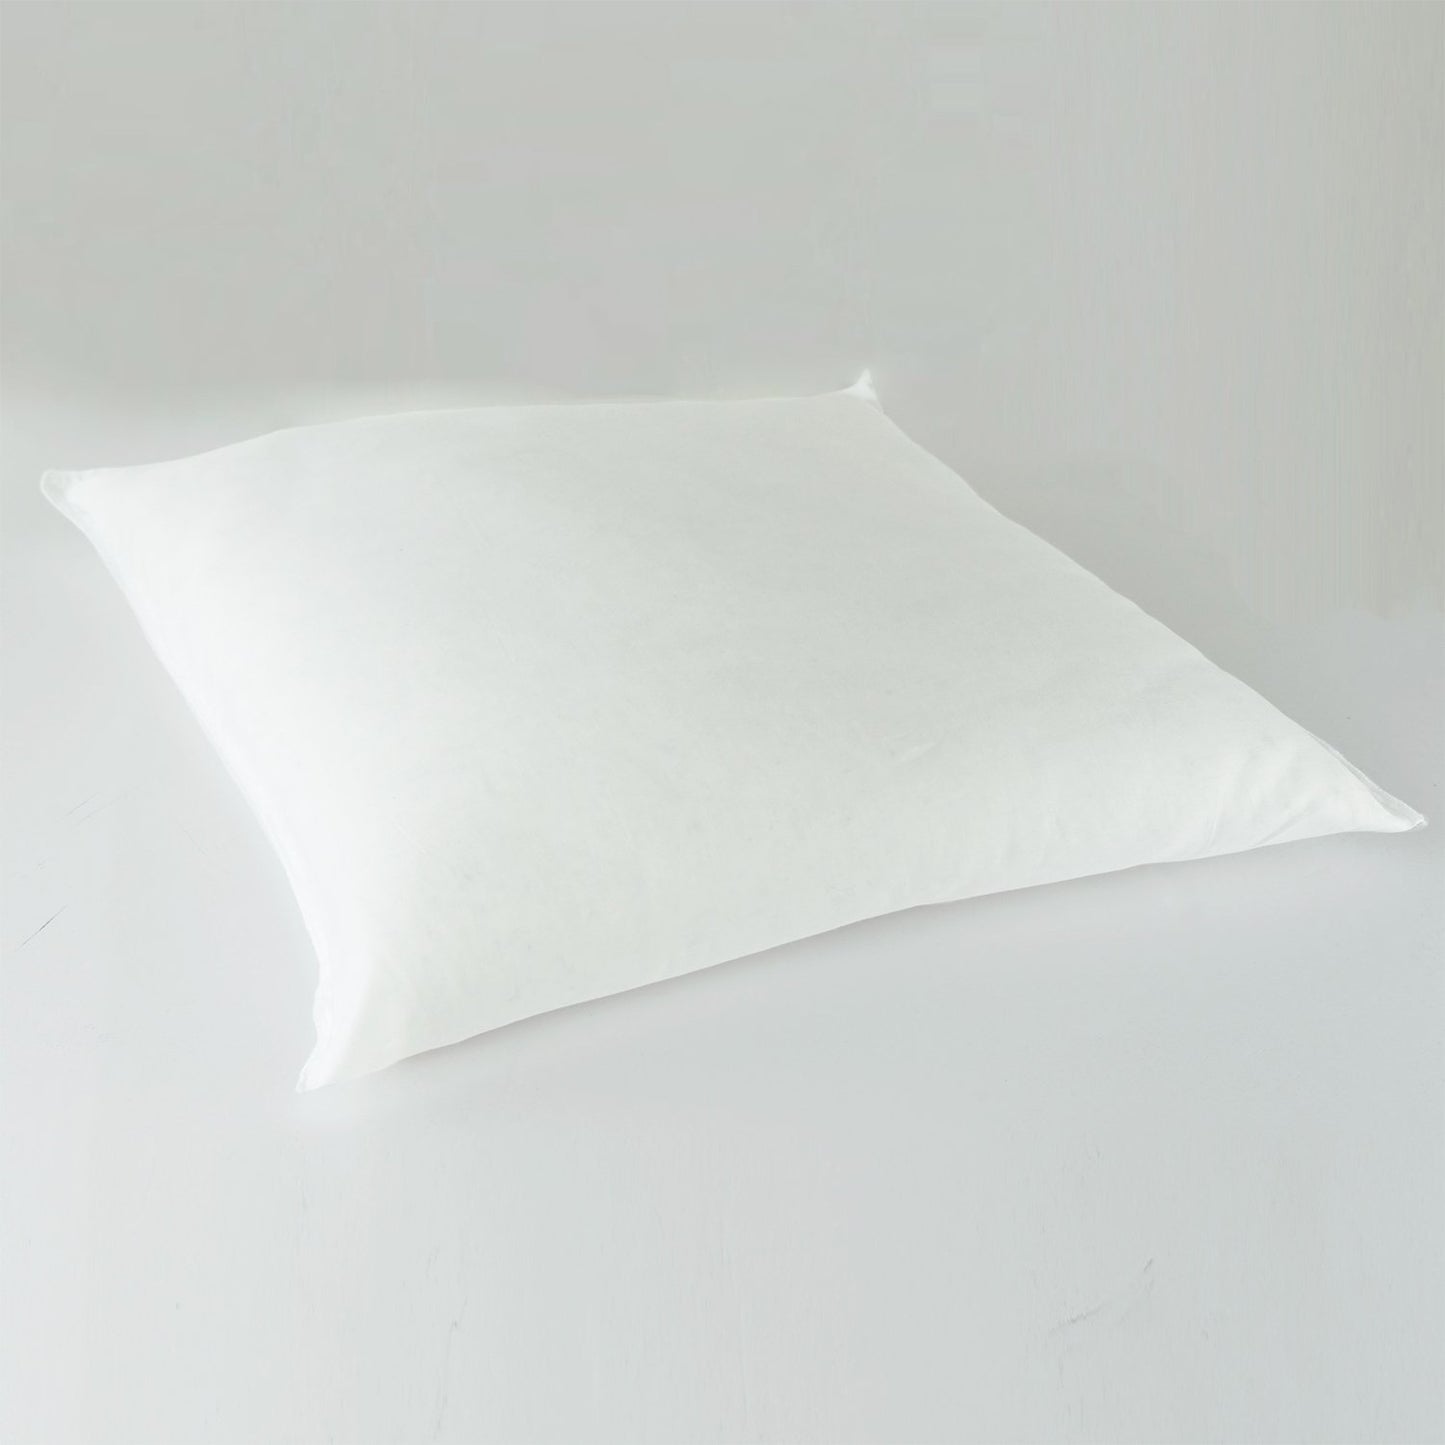 J-Life Tombo Blue #2 Zabuton Floor Pillow_Pillows & Shams_Zabuton Floor Pillows_100% Cotton_Reversible